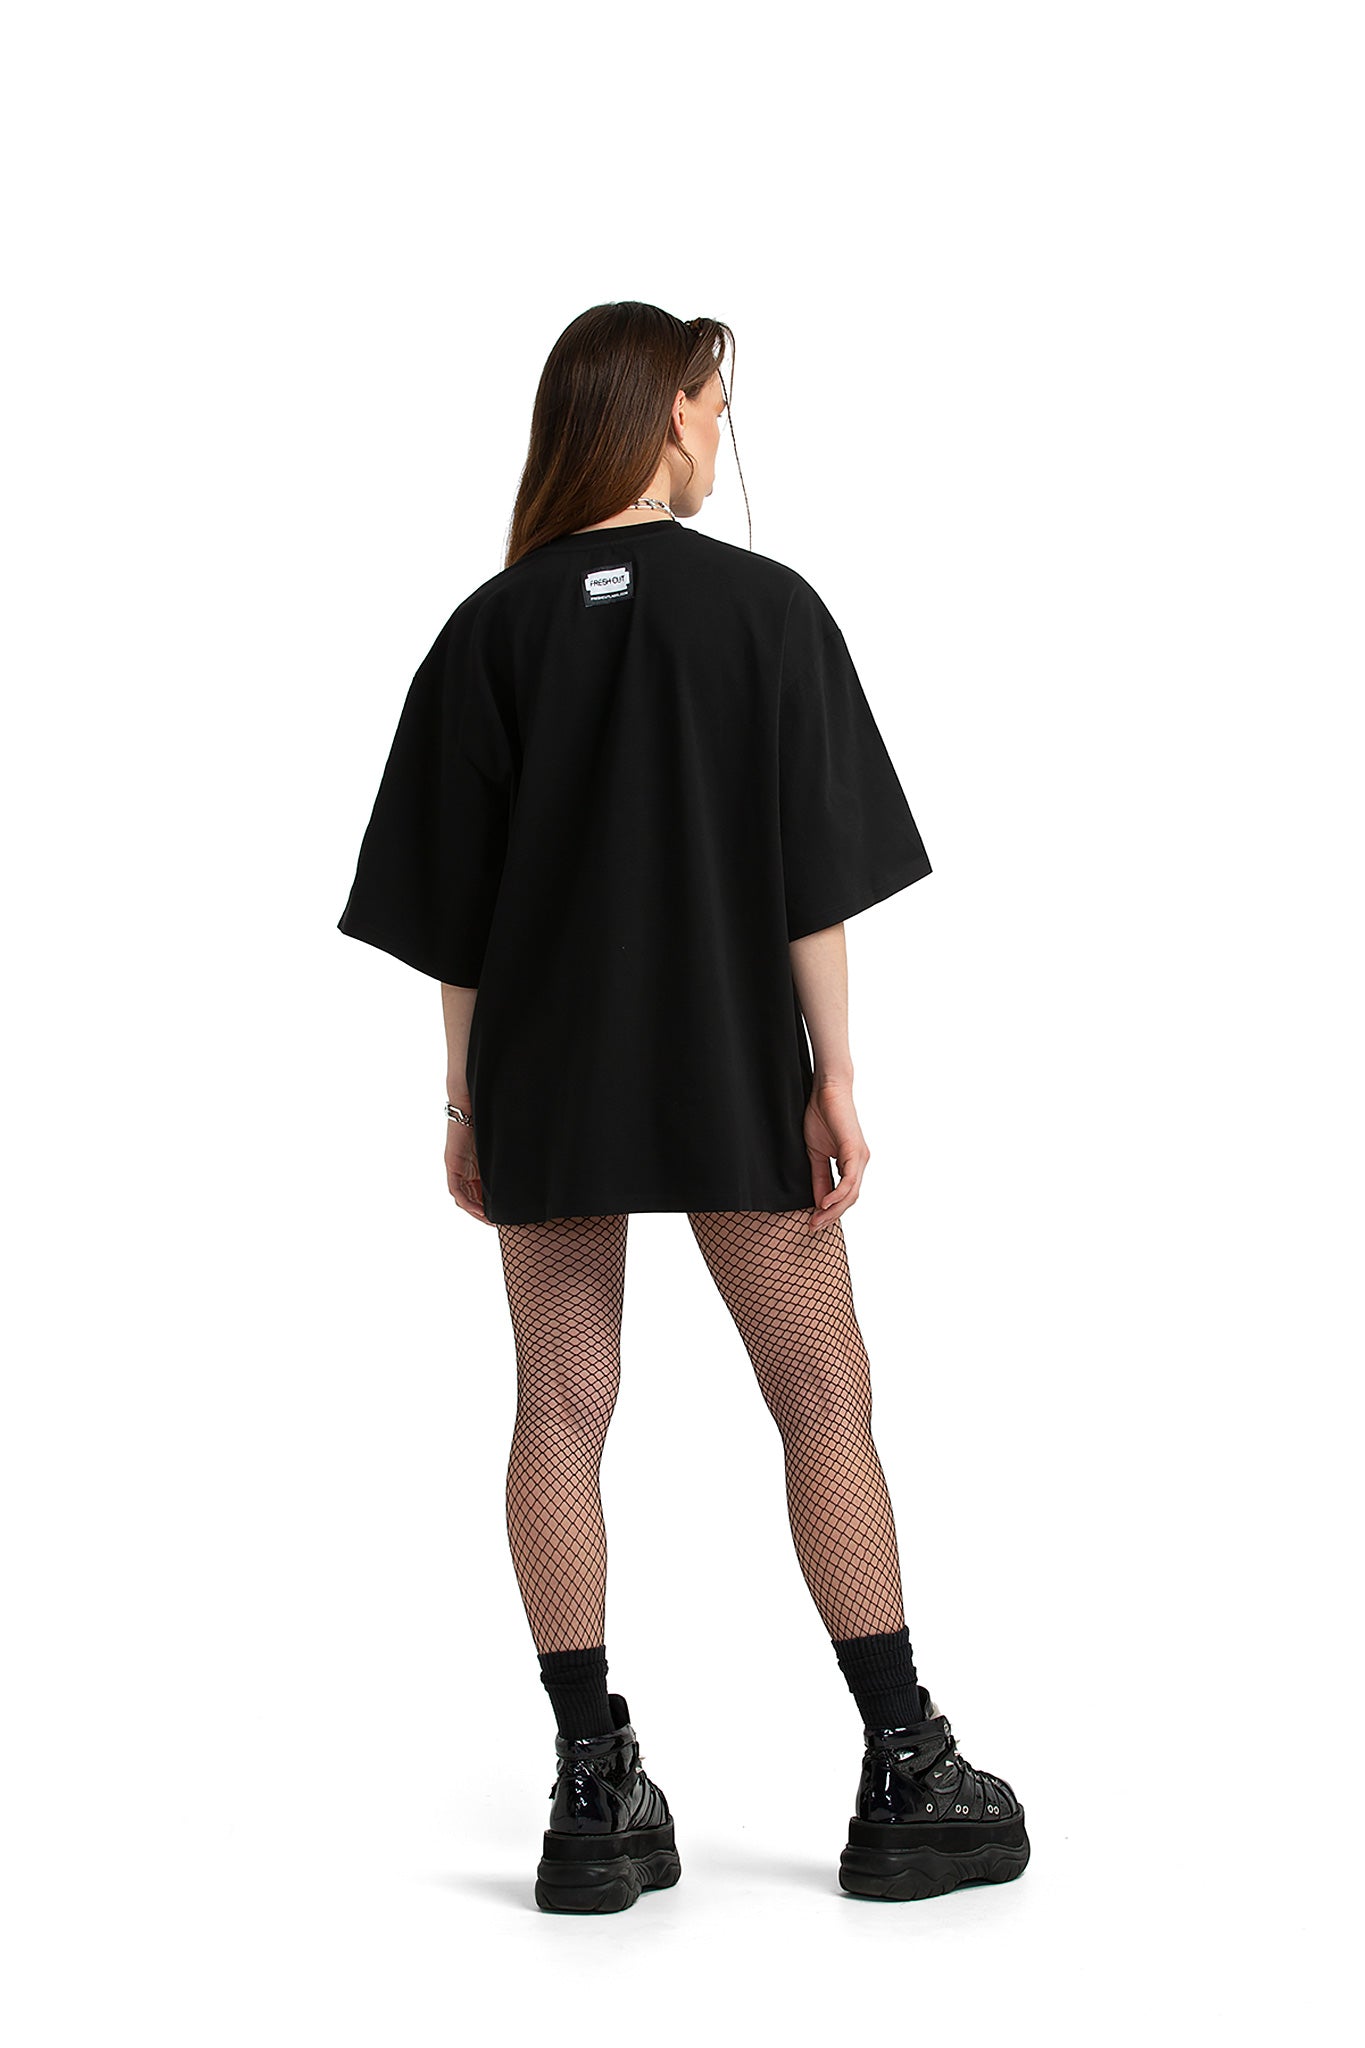 Techno Dragon oversized unisex T-shirt [black]